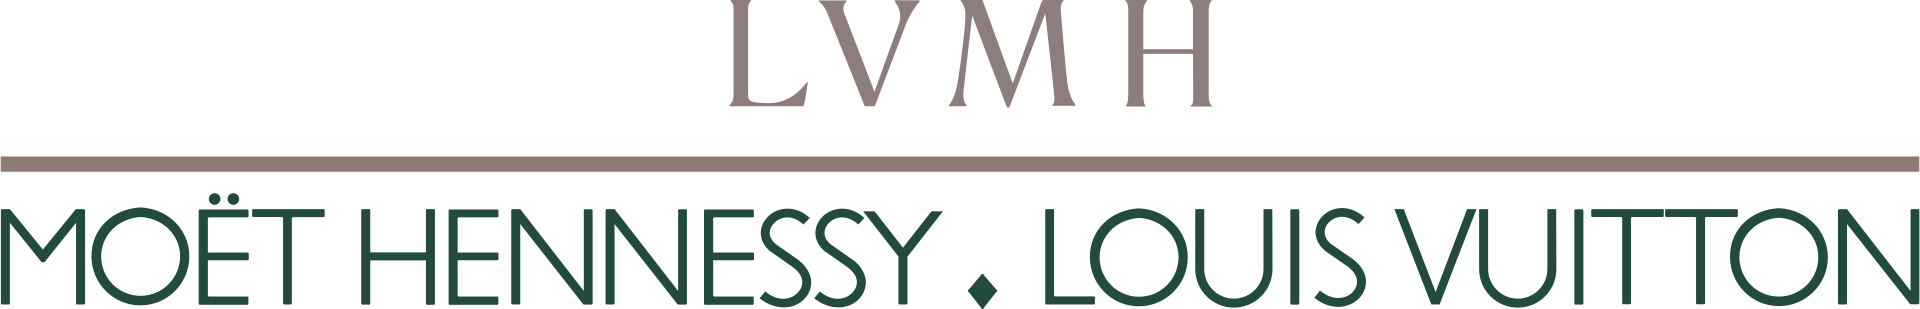 LVMH Luxury Goods Company Logo Editorial Stock Image - Image of goods,  family: 114220124